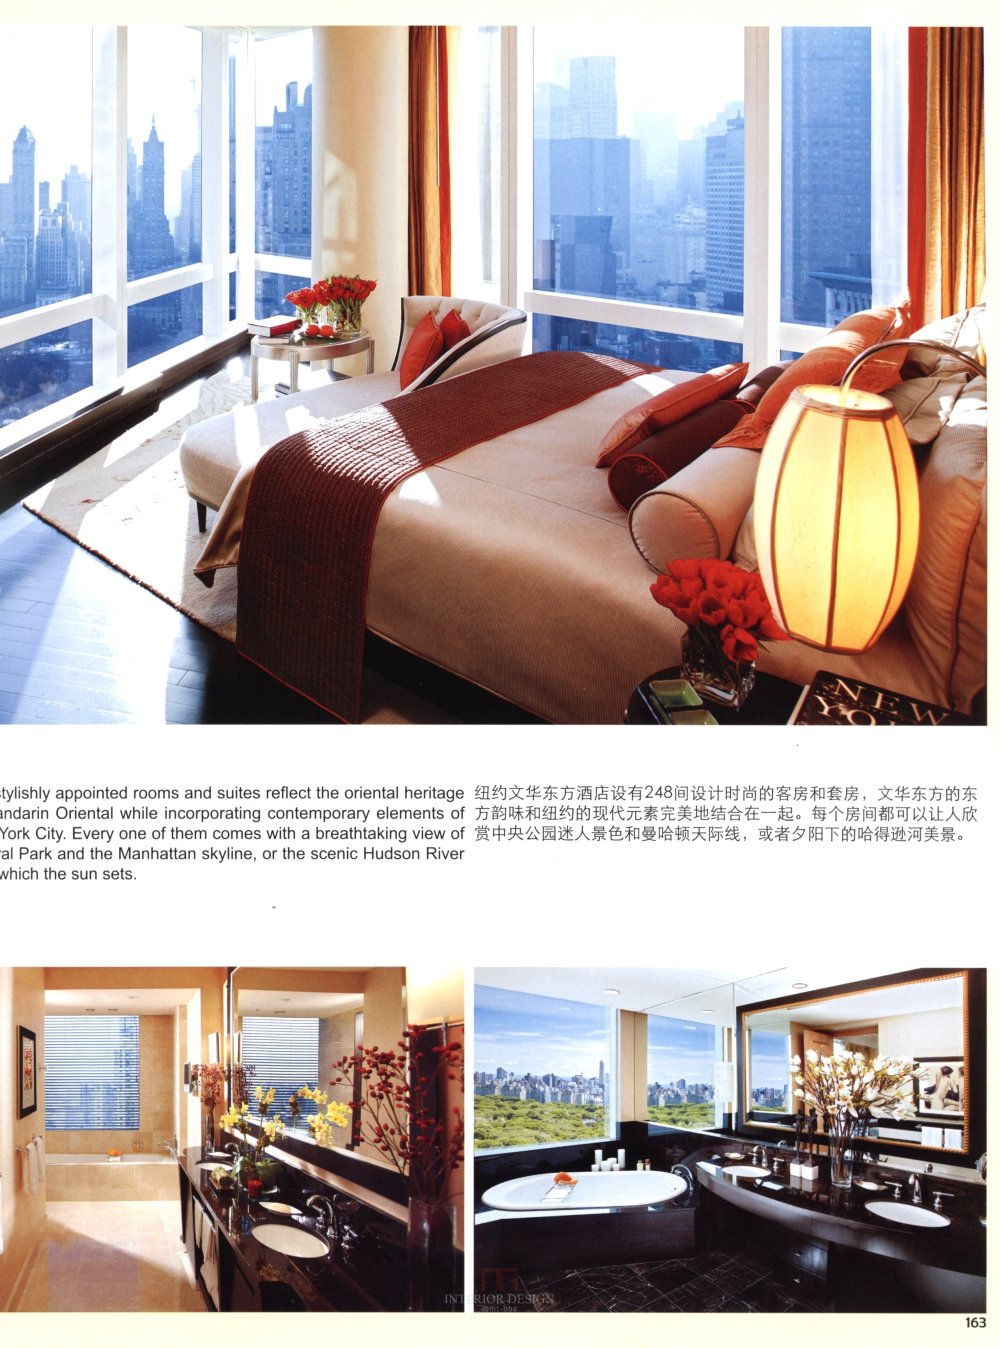 101全球酒店客房 101HOTELS GUEST ROOMS_图站_AiJpgg_com_158.jpg